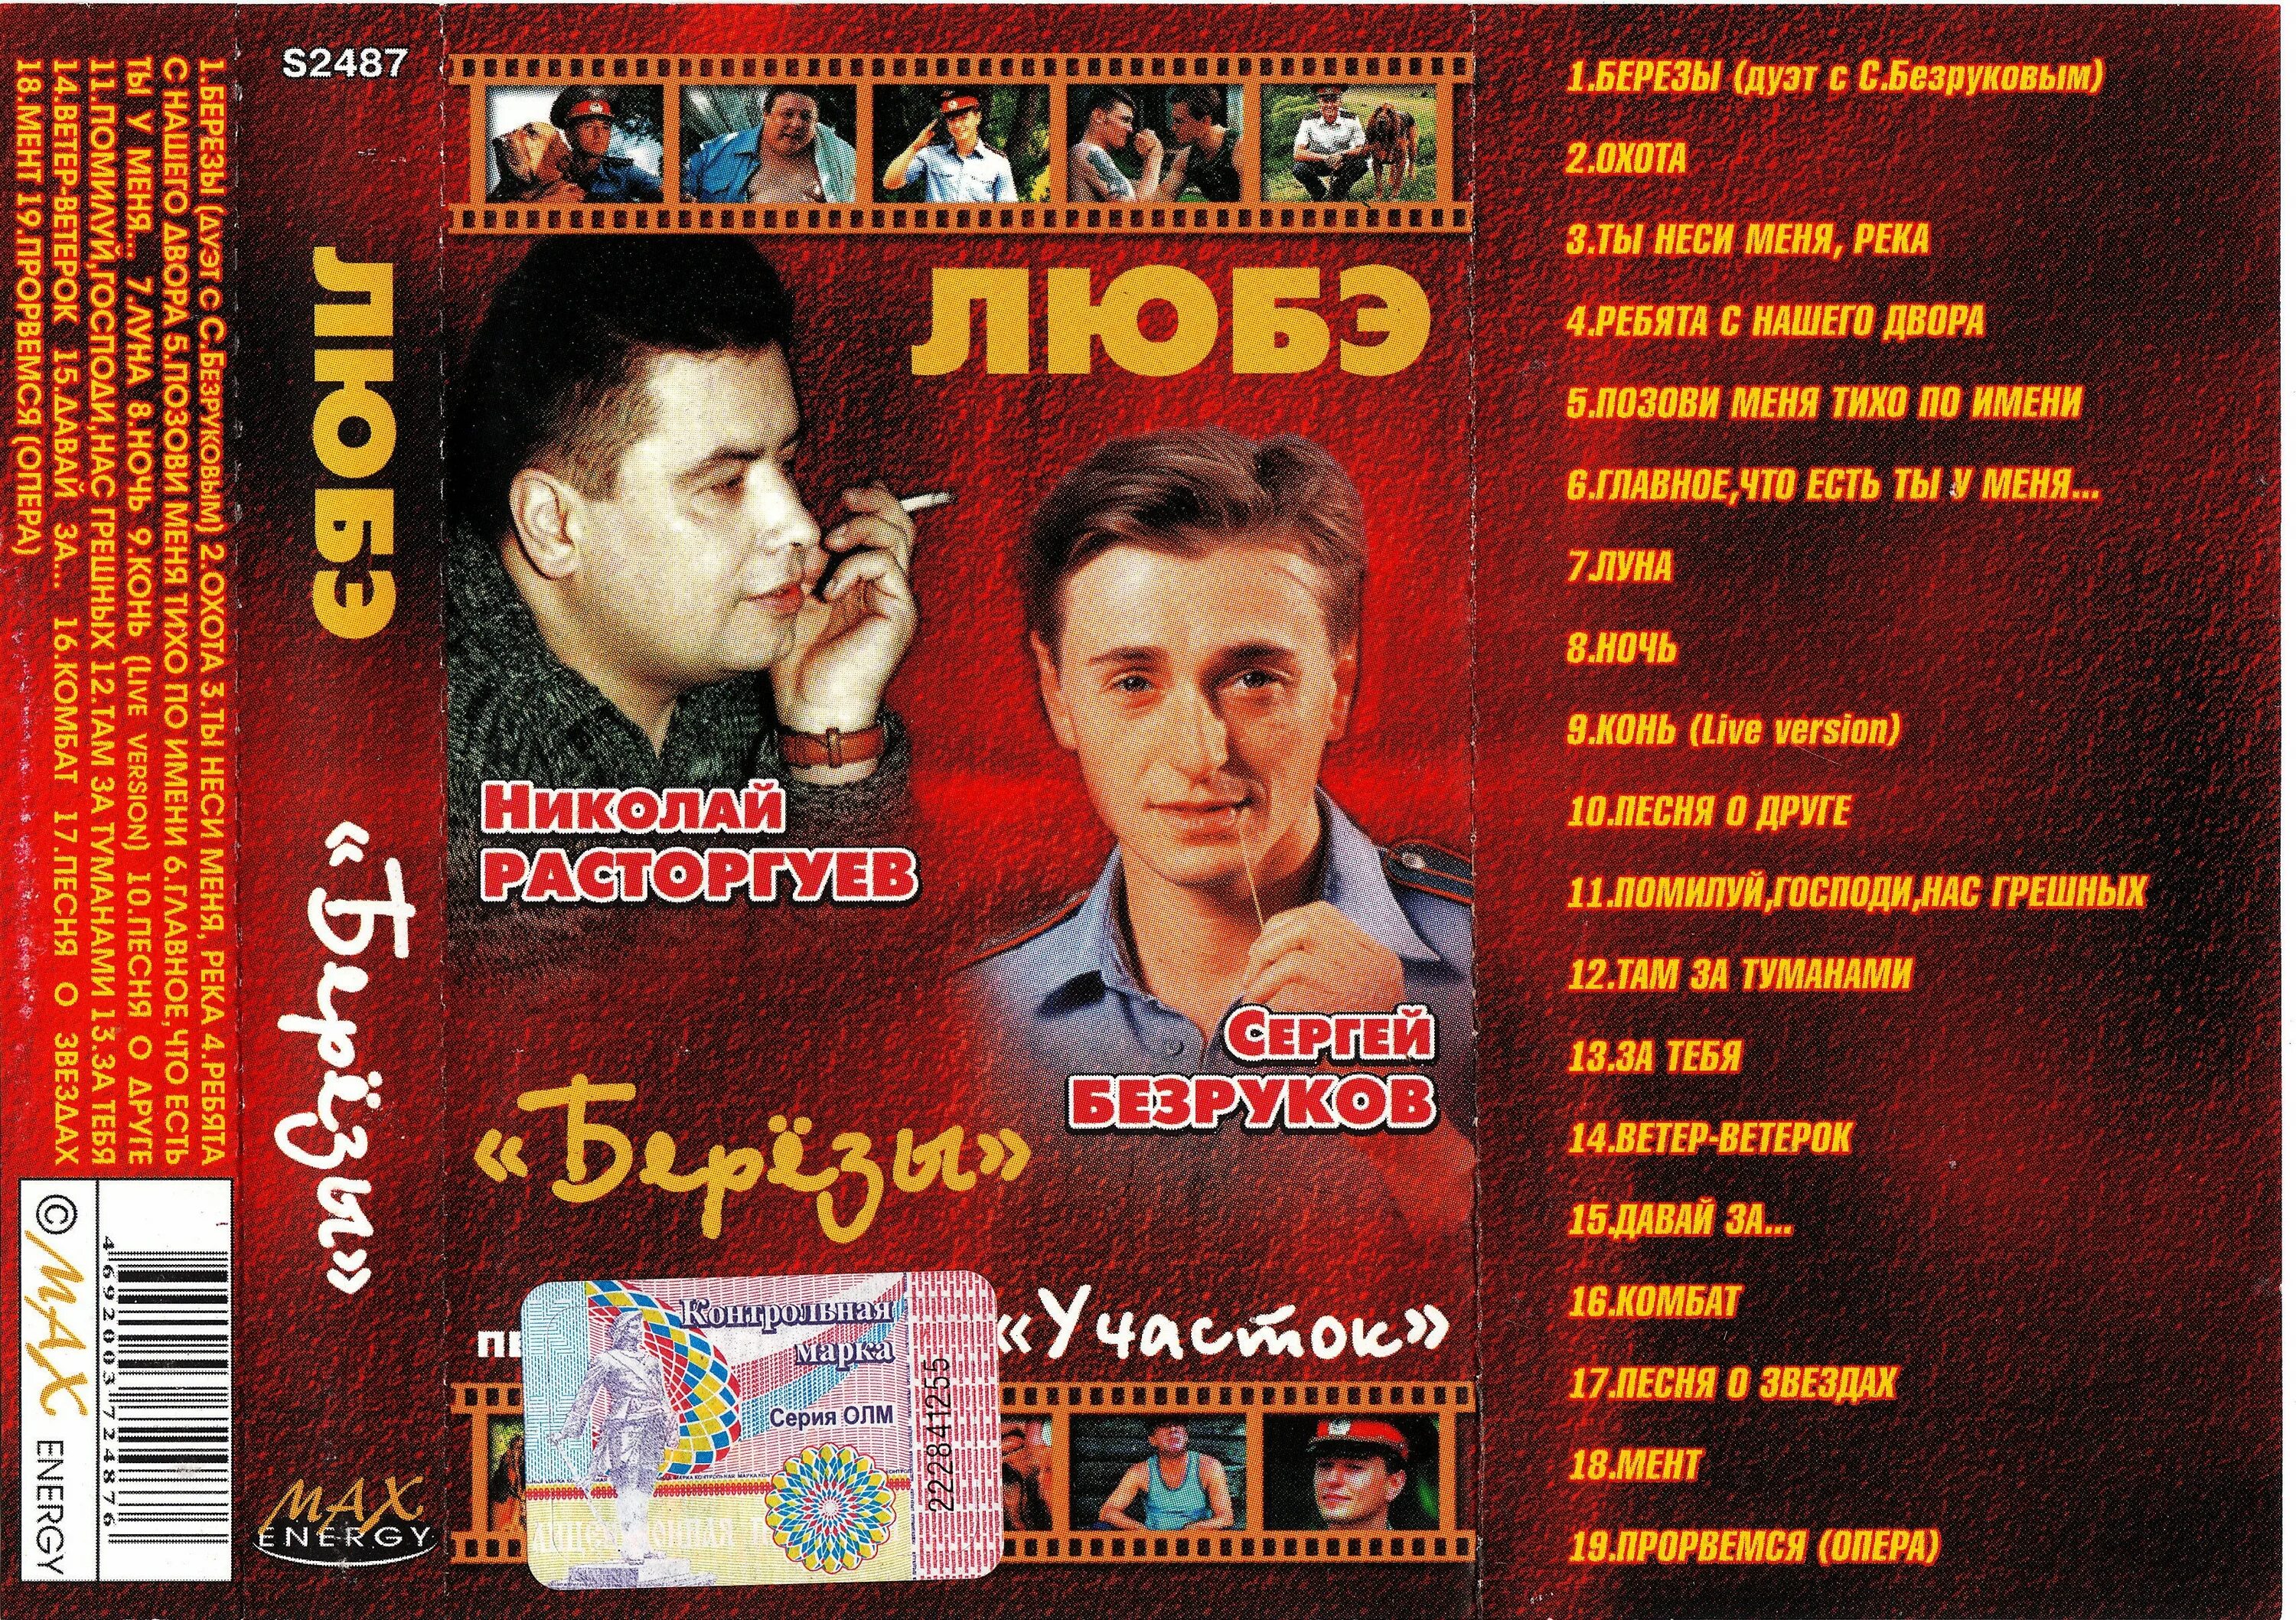 Любэ кассета 2003. Аудиокассета группы Любэ. Берёзы Безруков Любэ кассета. Музыка группы сборники